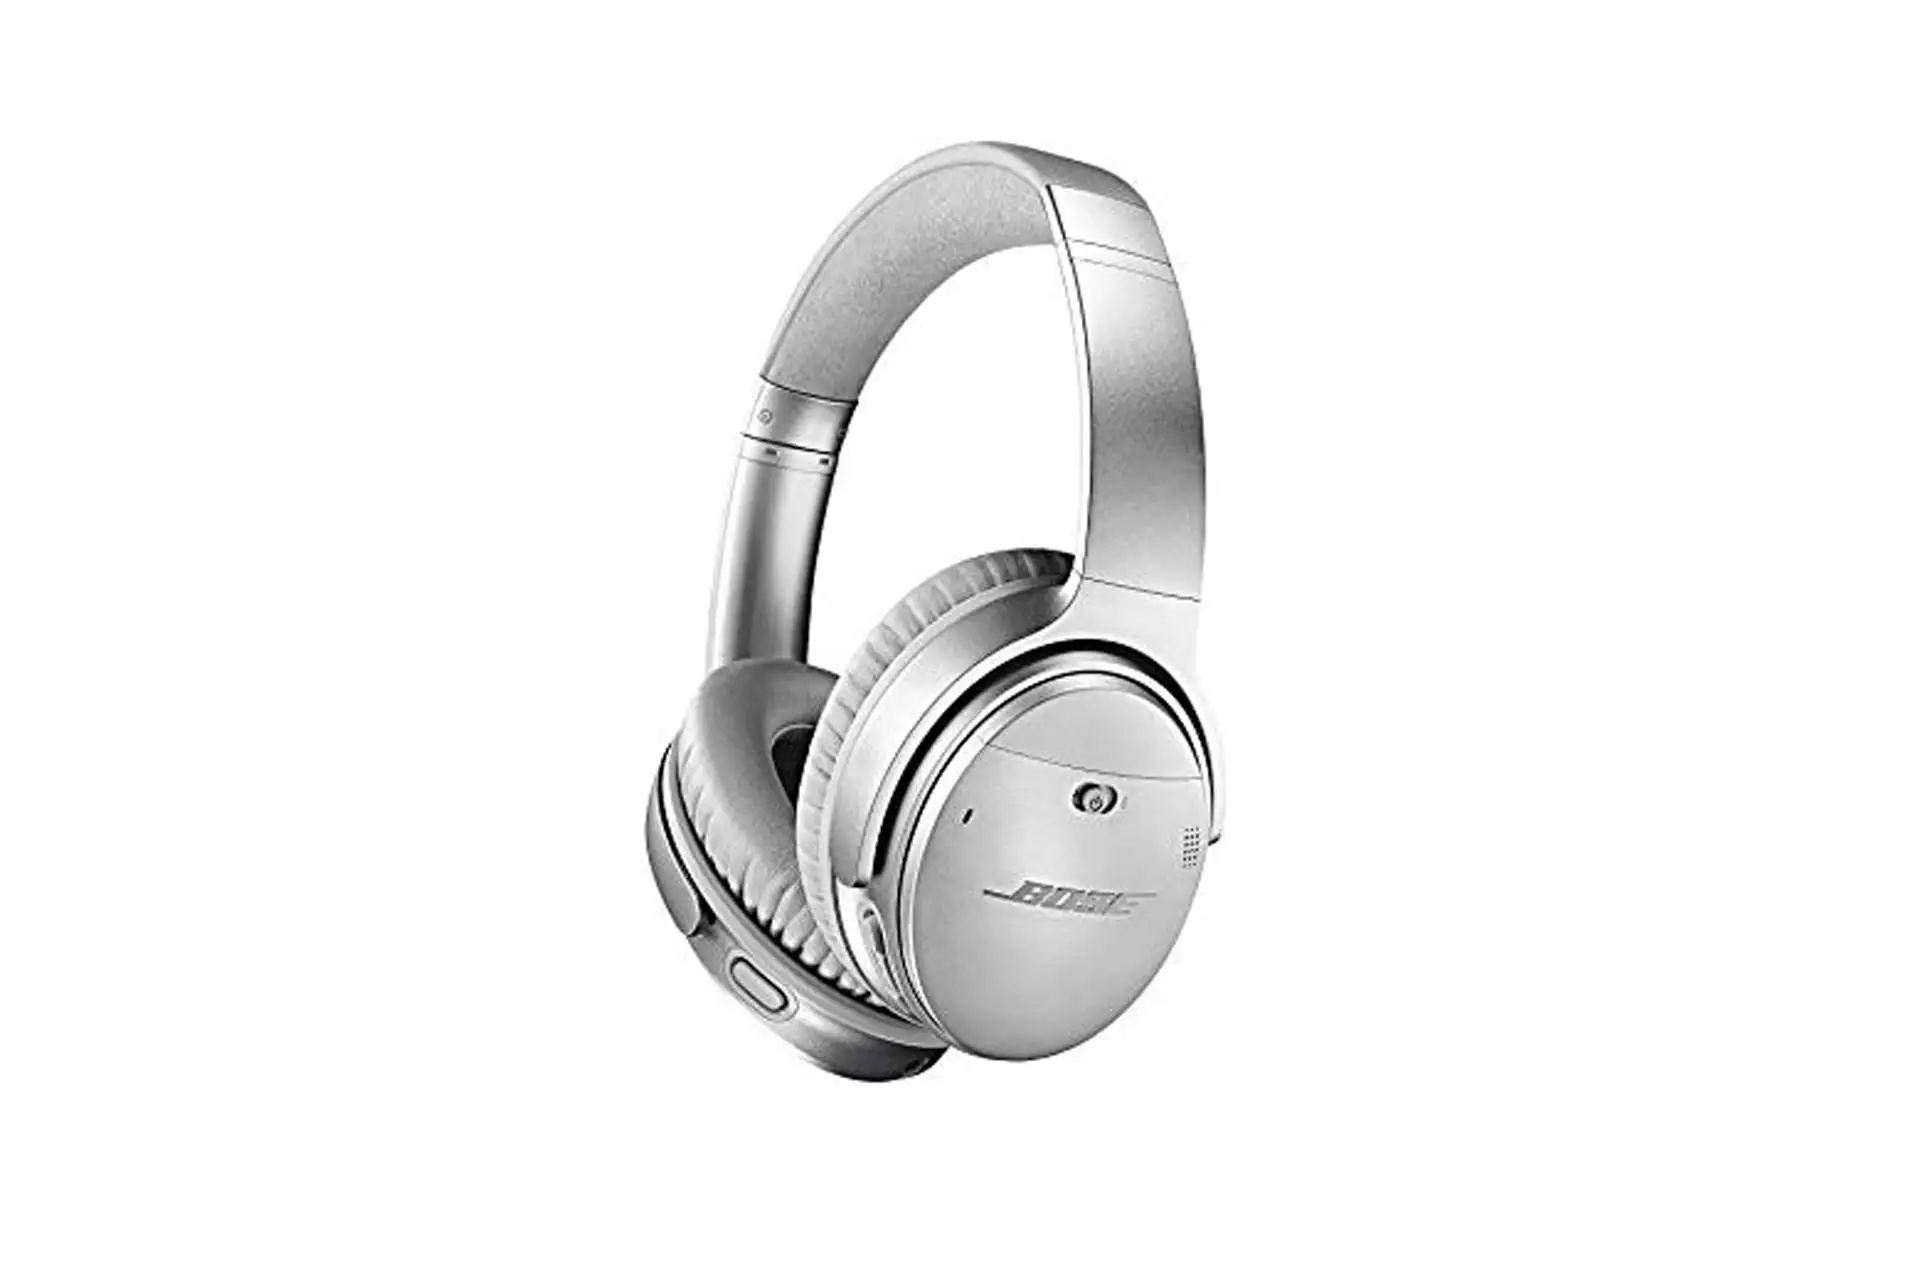 Bose Headphones; Courtesy of Amazon